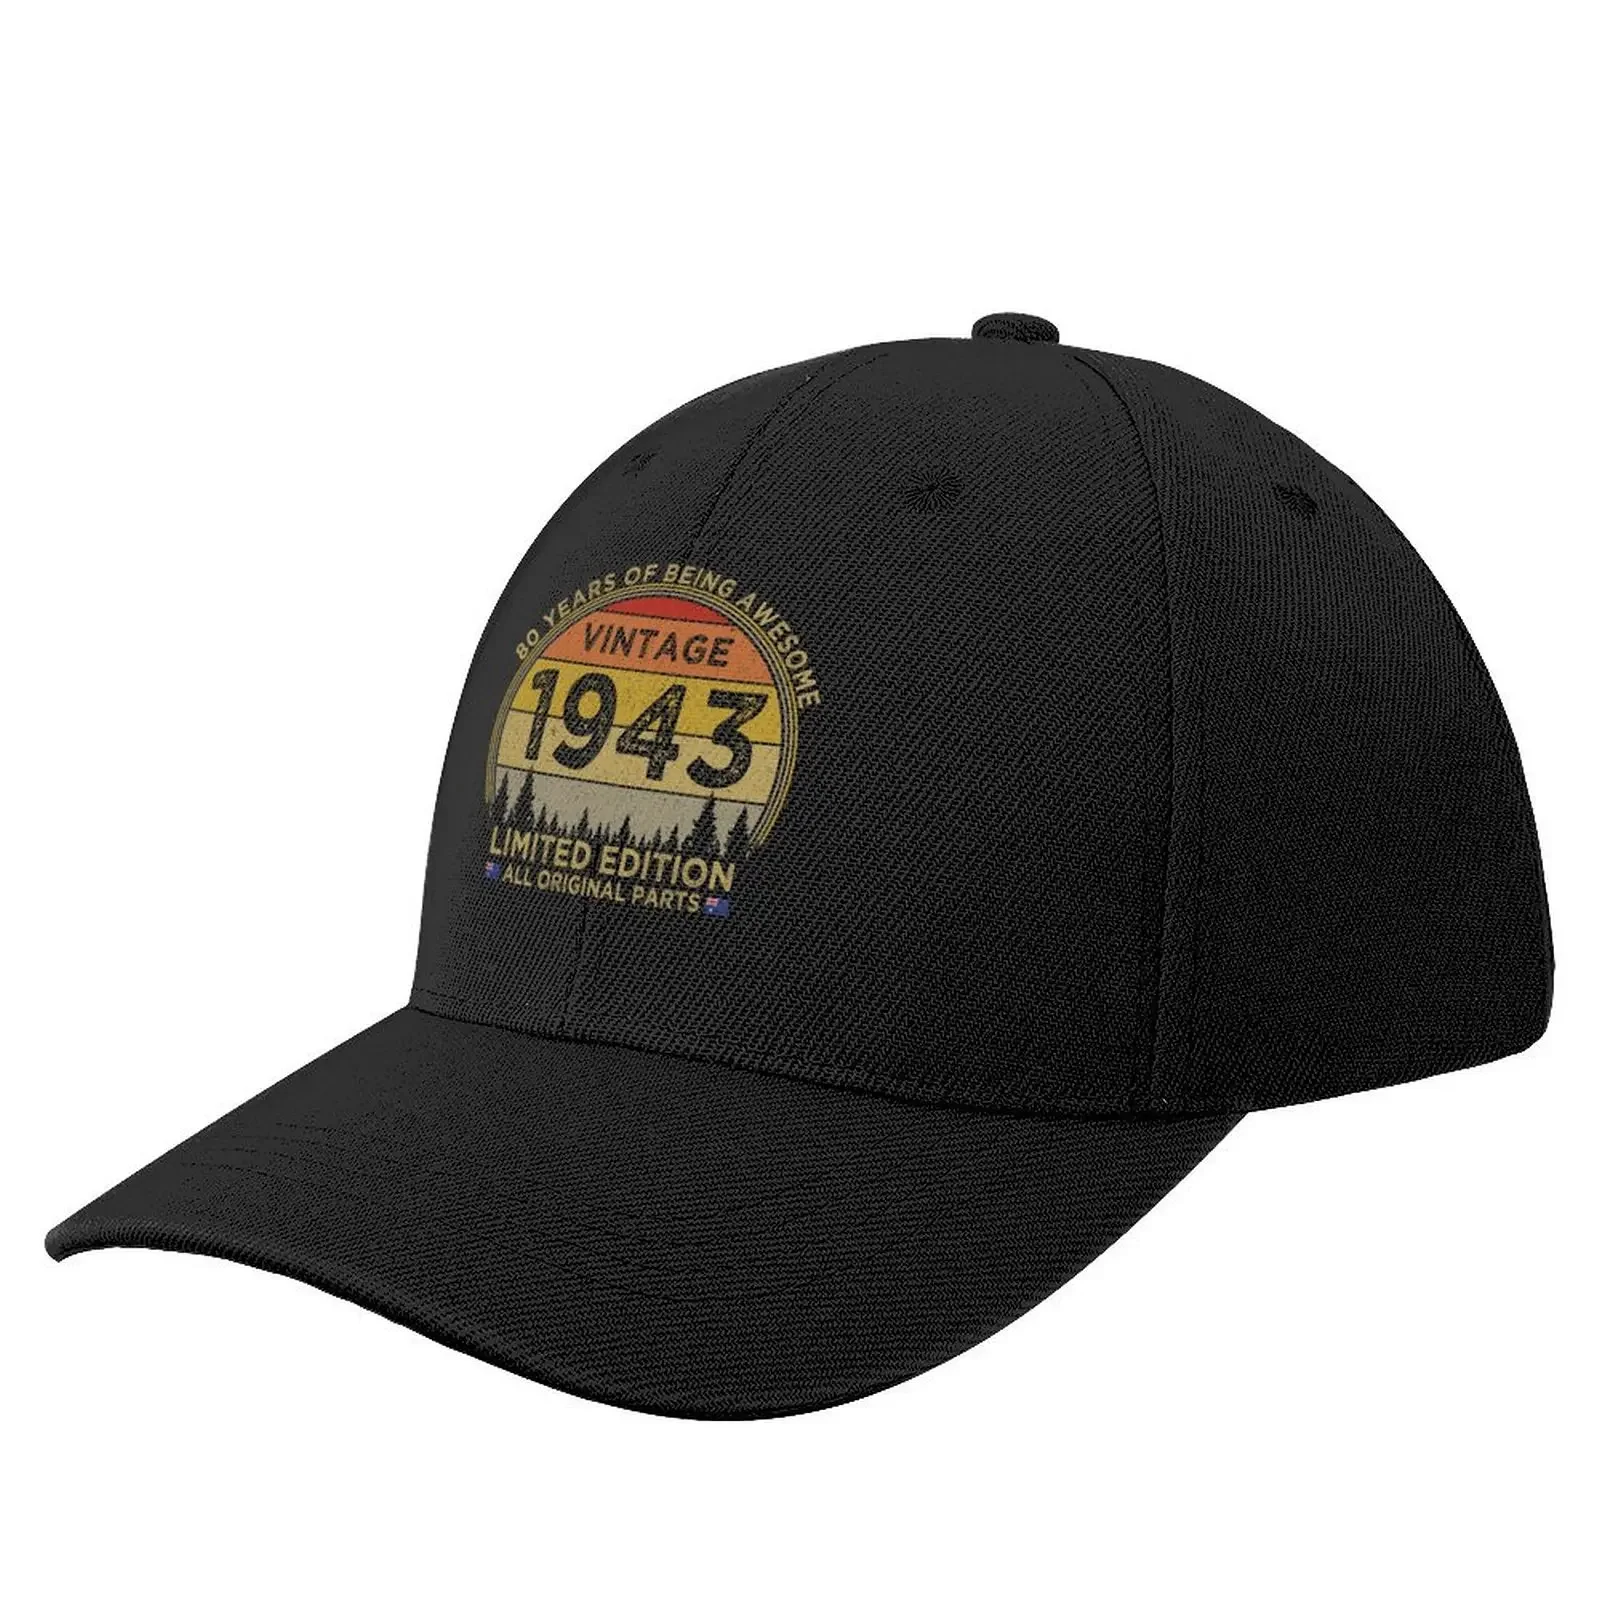 

80th Birthday Vintage 1943 Limited Edition Patriotic Australia Baseball Cap Thermal Visor Military Cap Man Mens Hats Women's